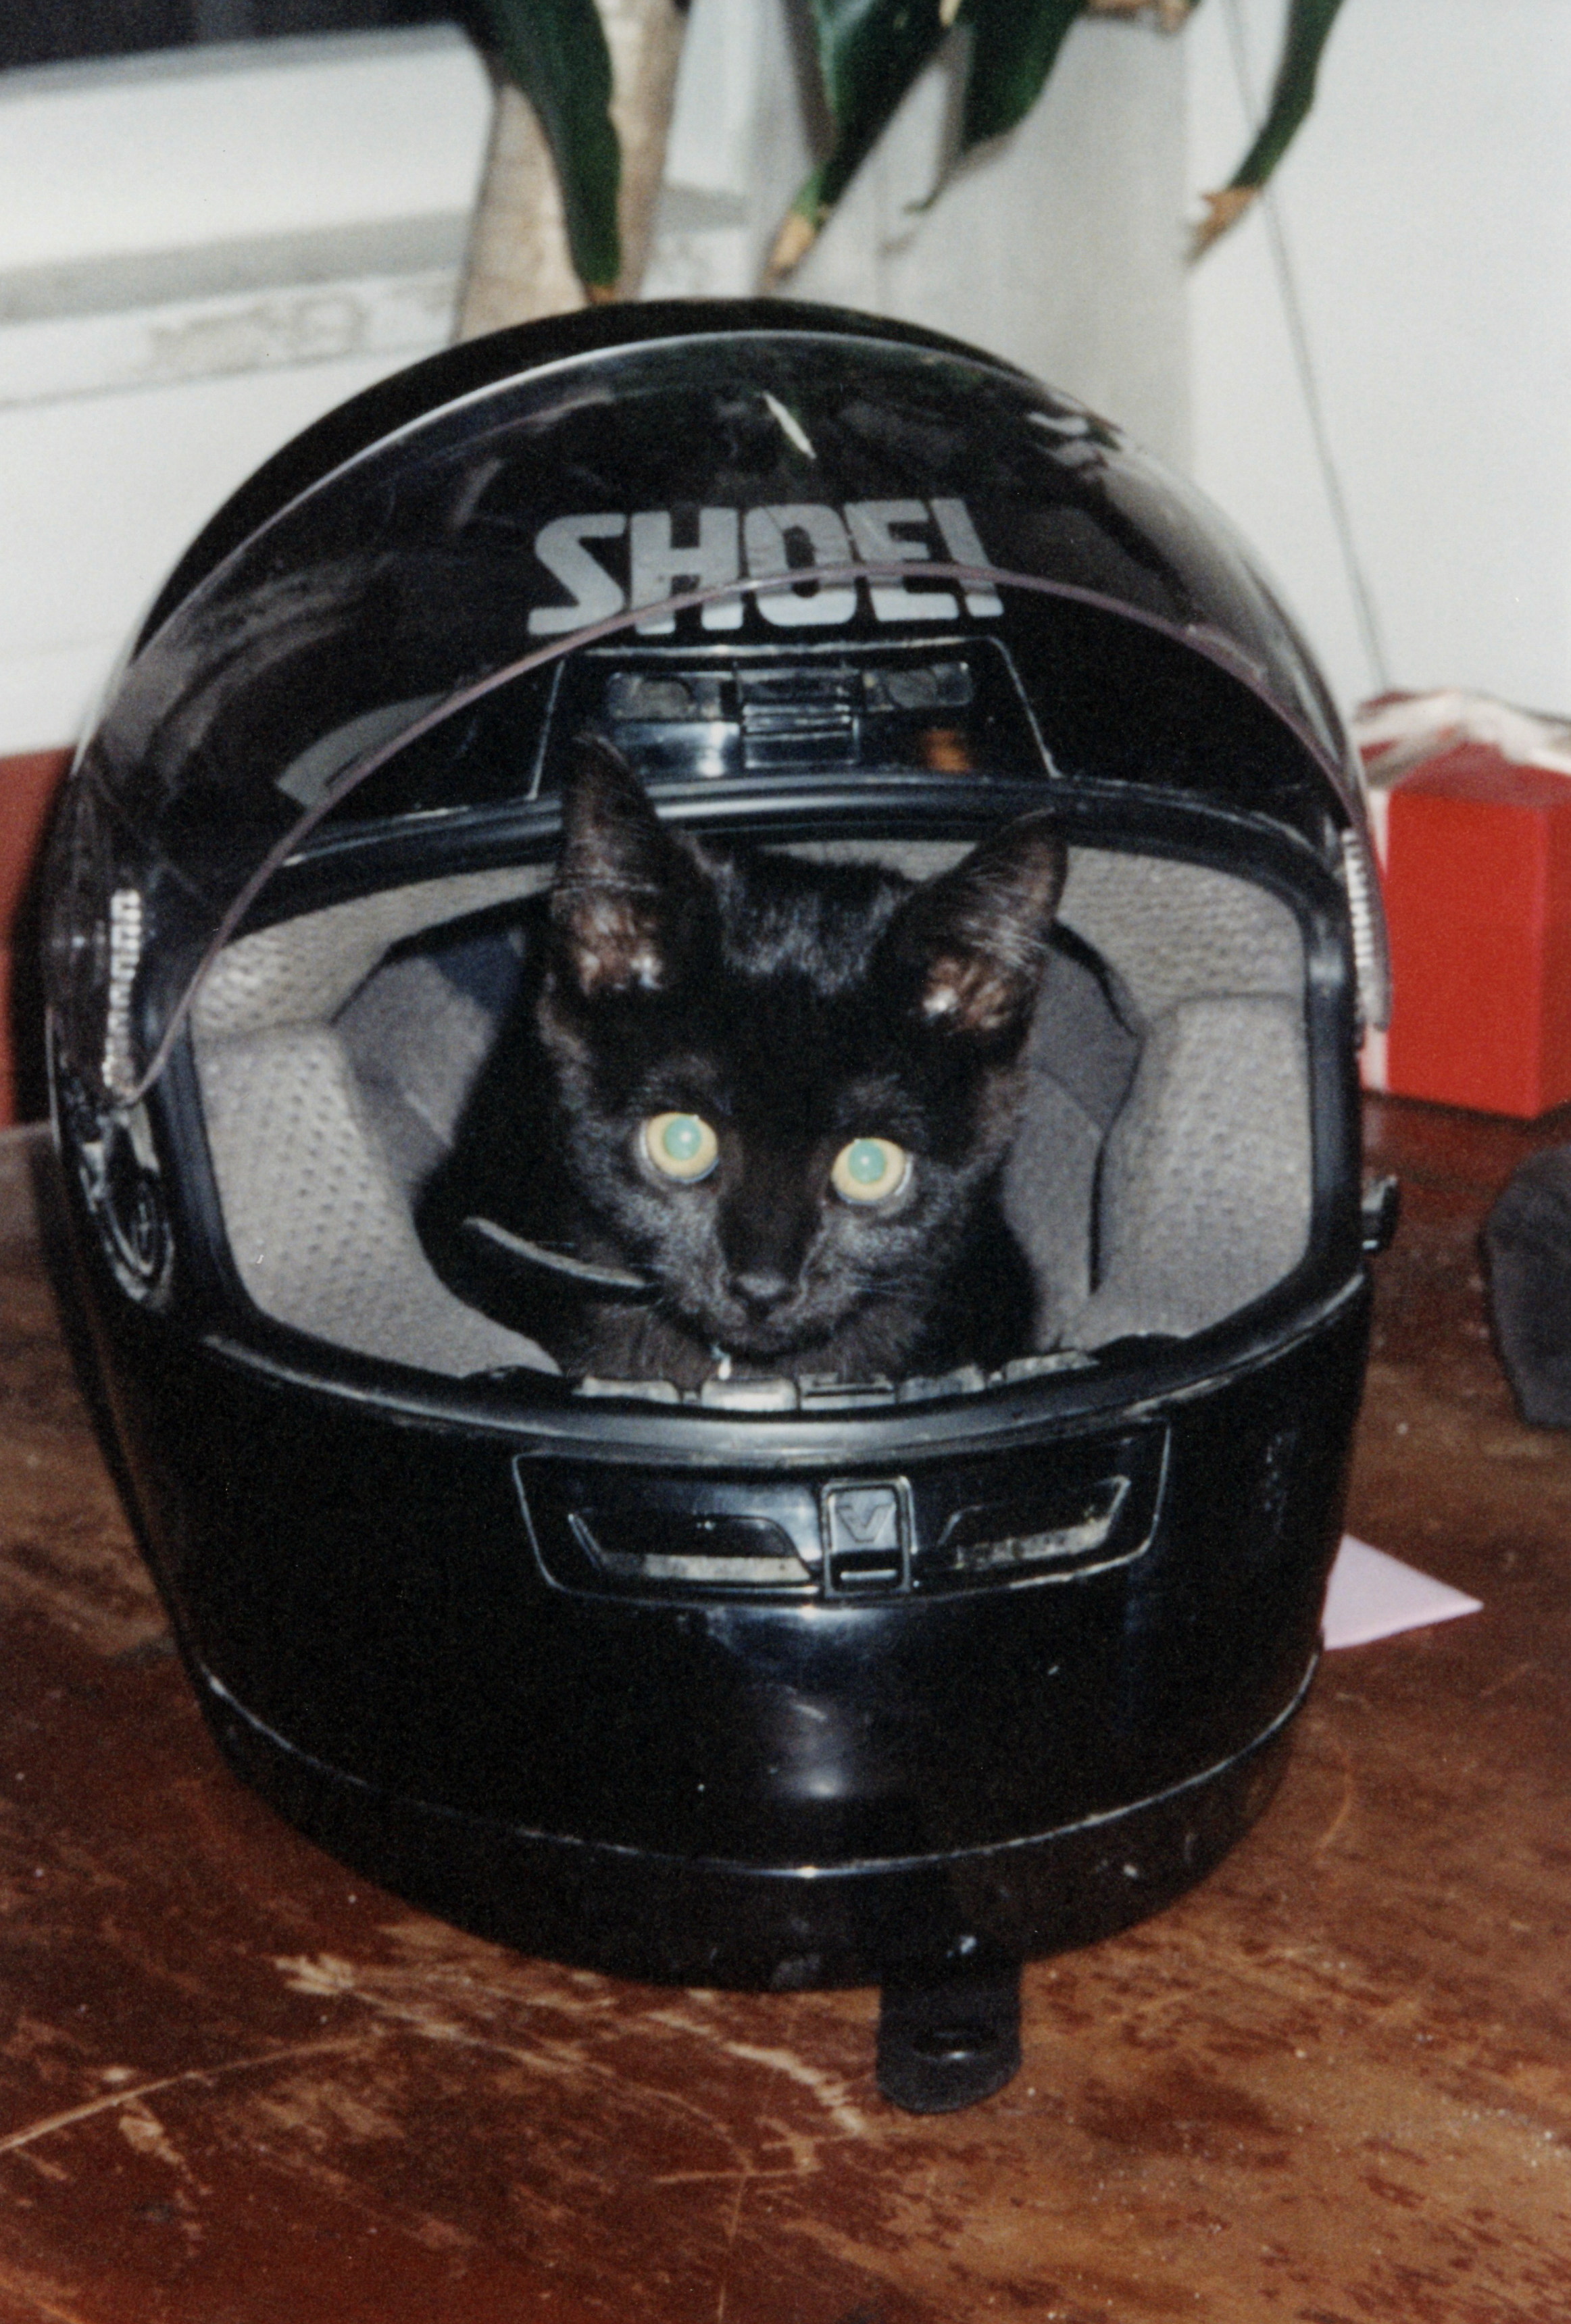 cat motorcycle